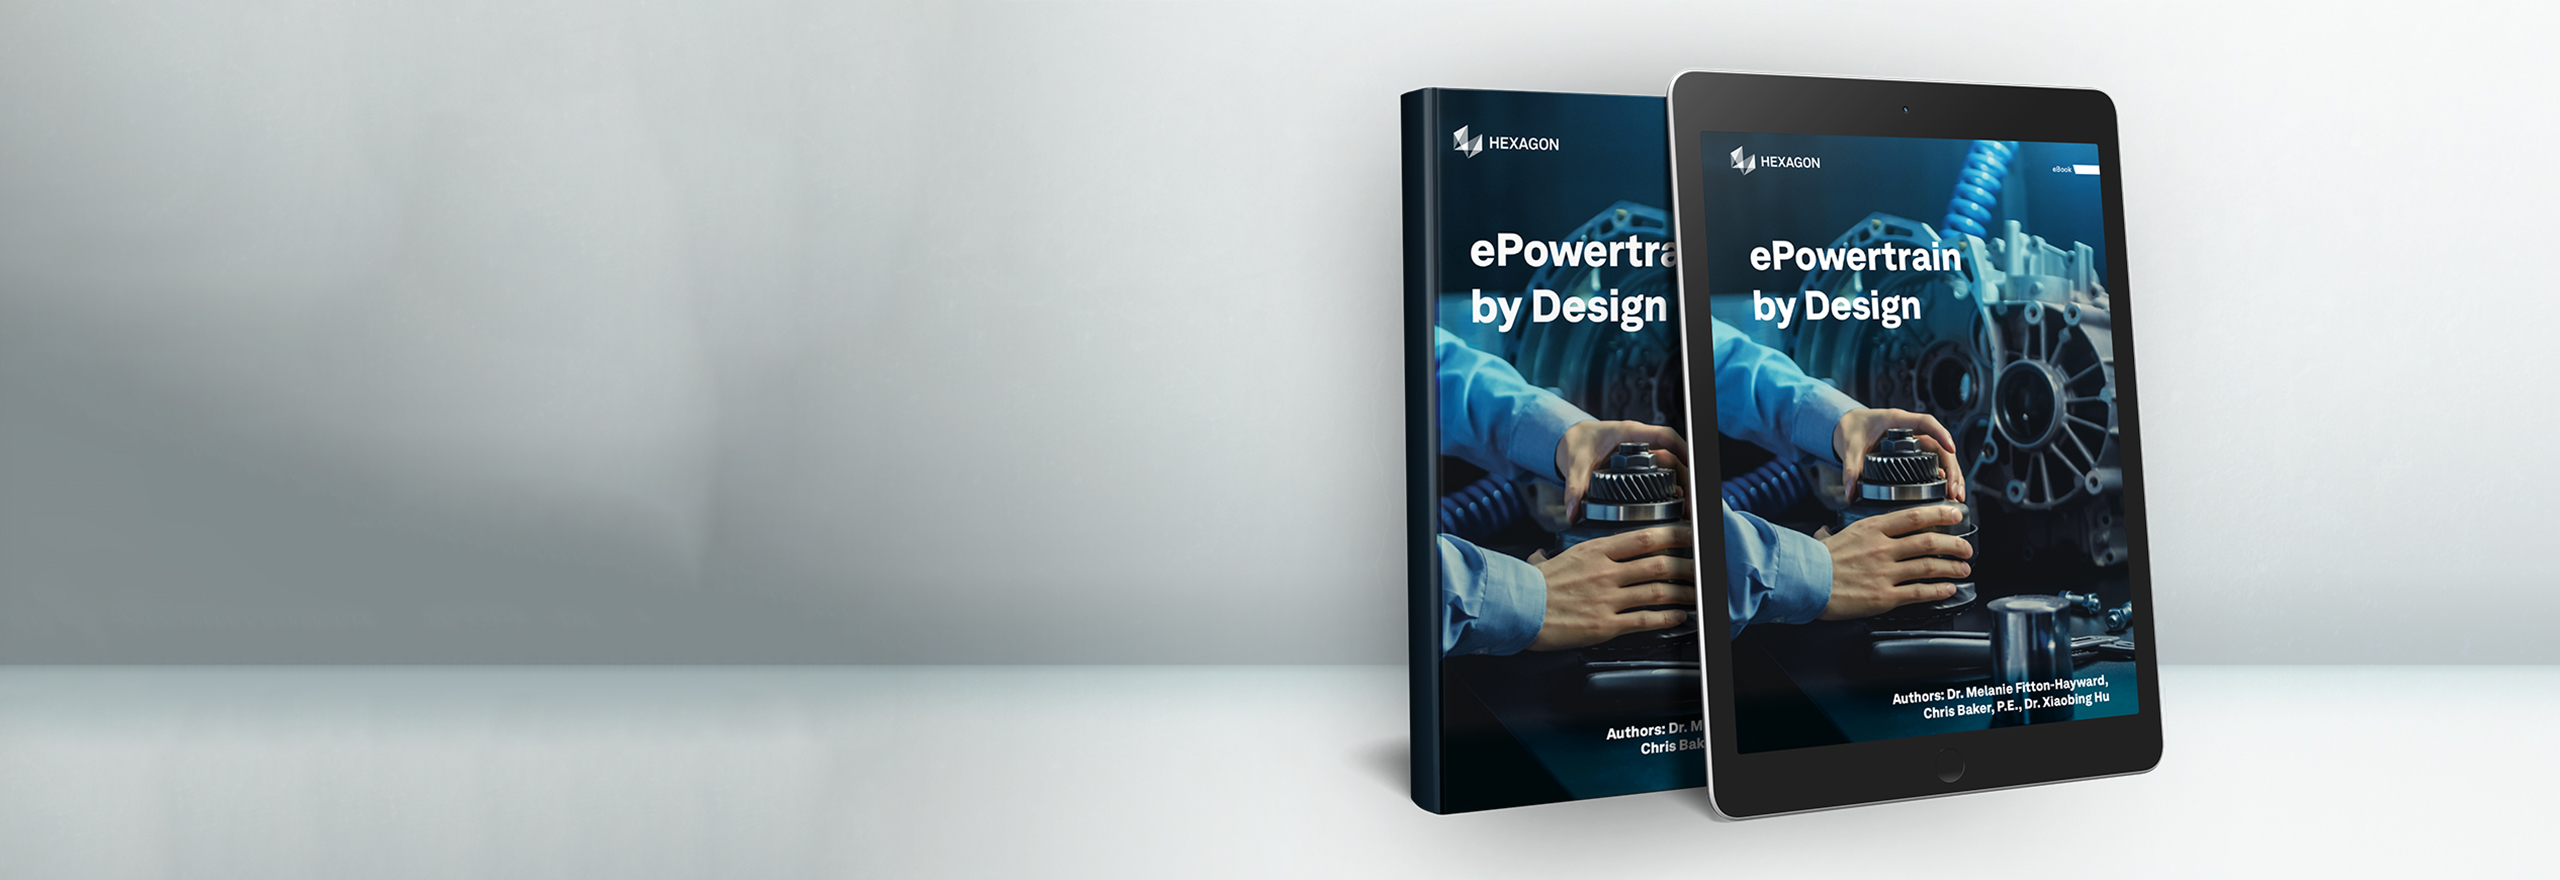 ePowertrain by design eBook shown on tablet screen